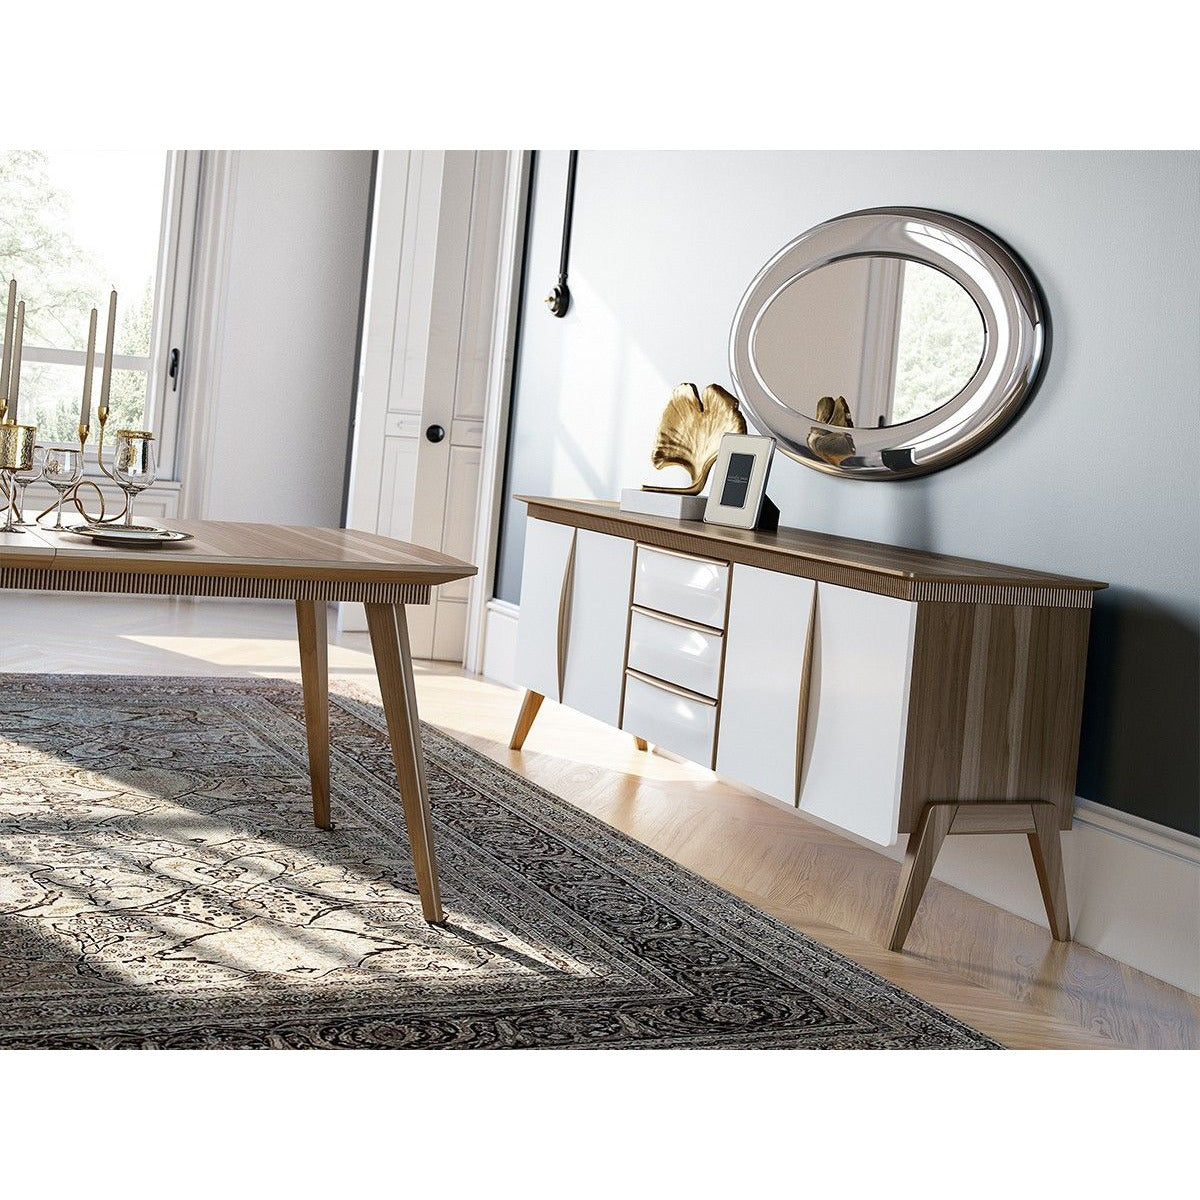 Lima Skänk - LINE Furniture Group